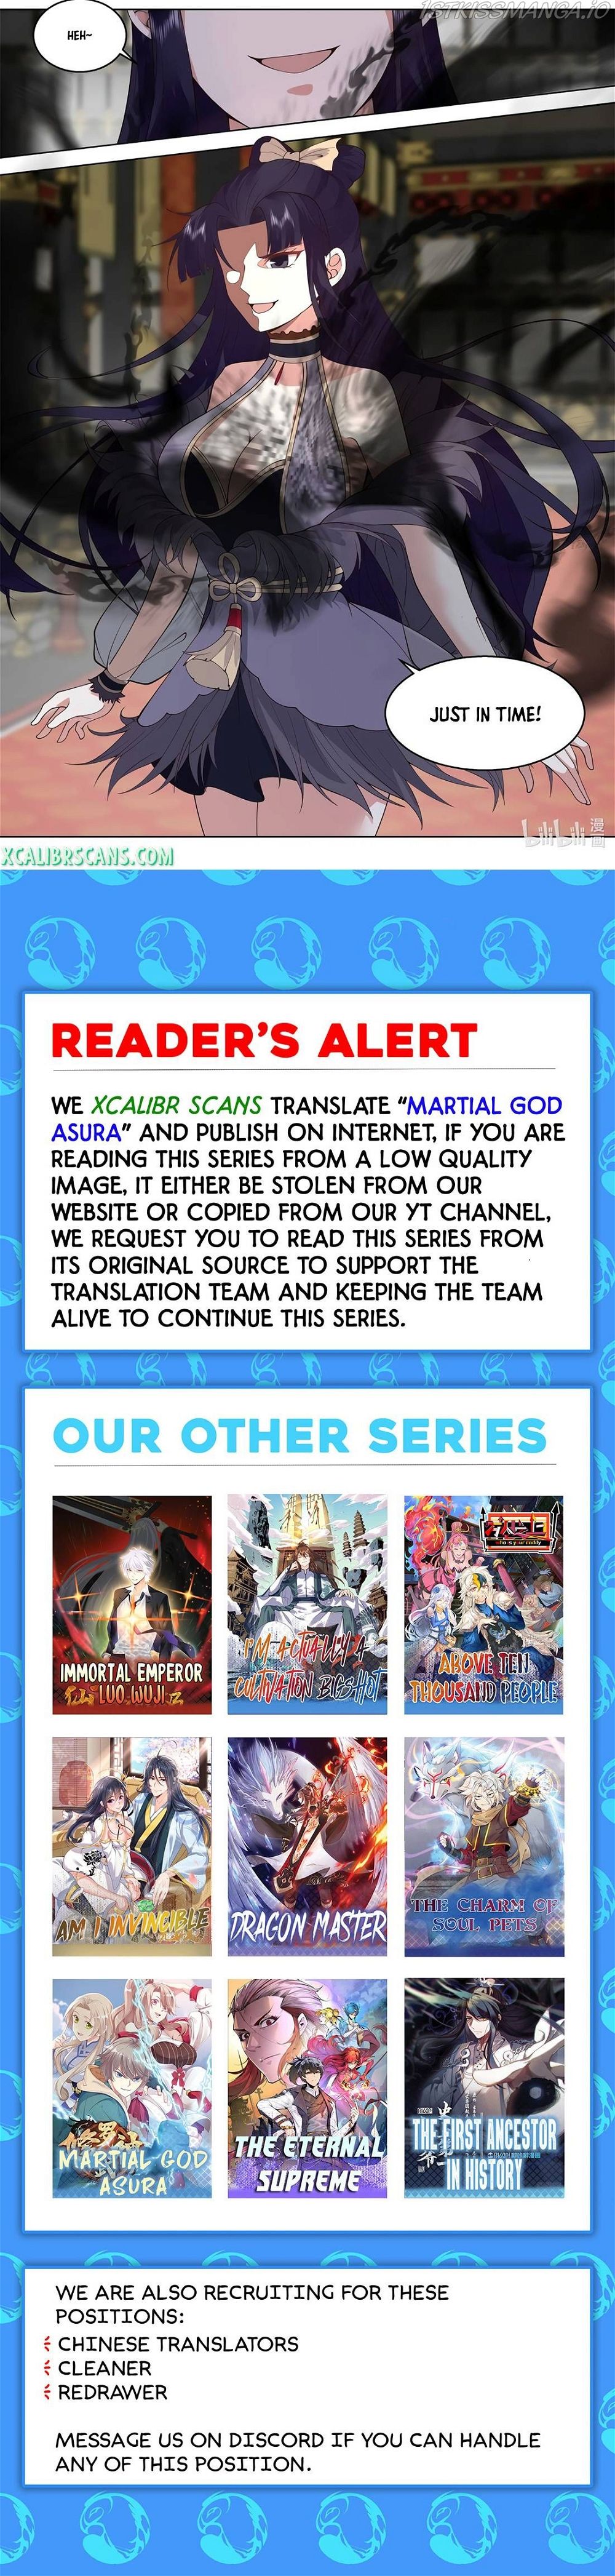 Martial God Asura Chapter 504 - Page 10